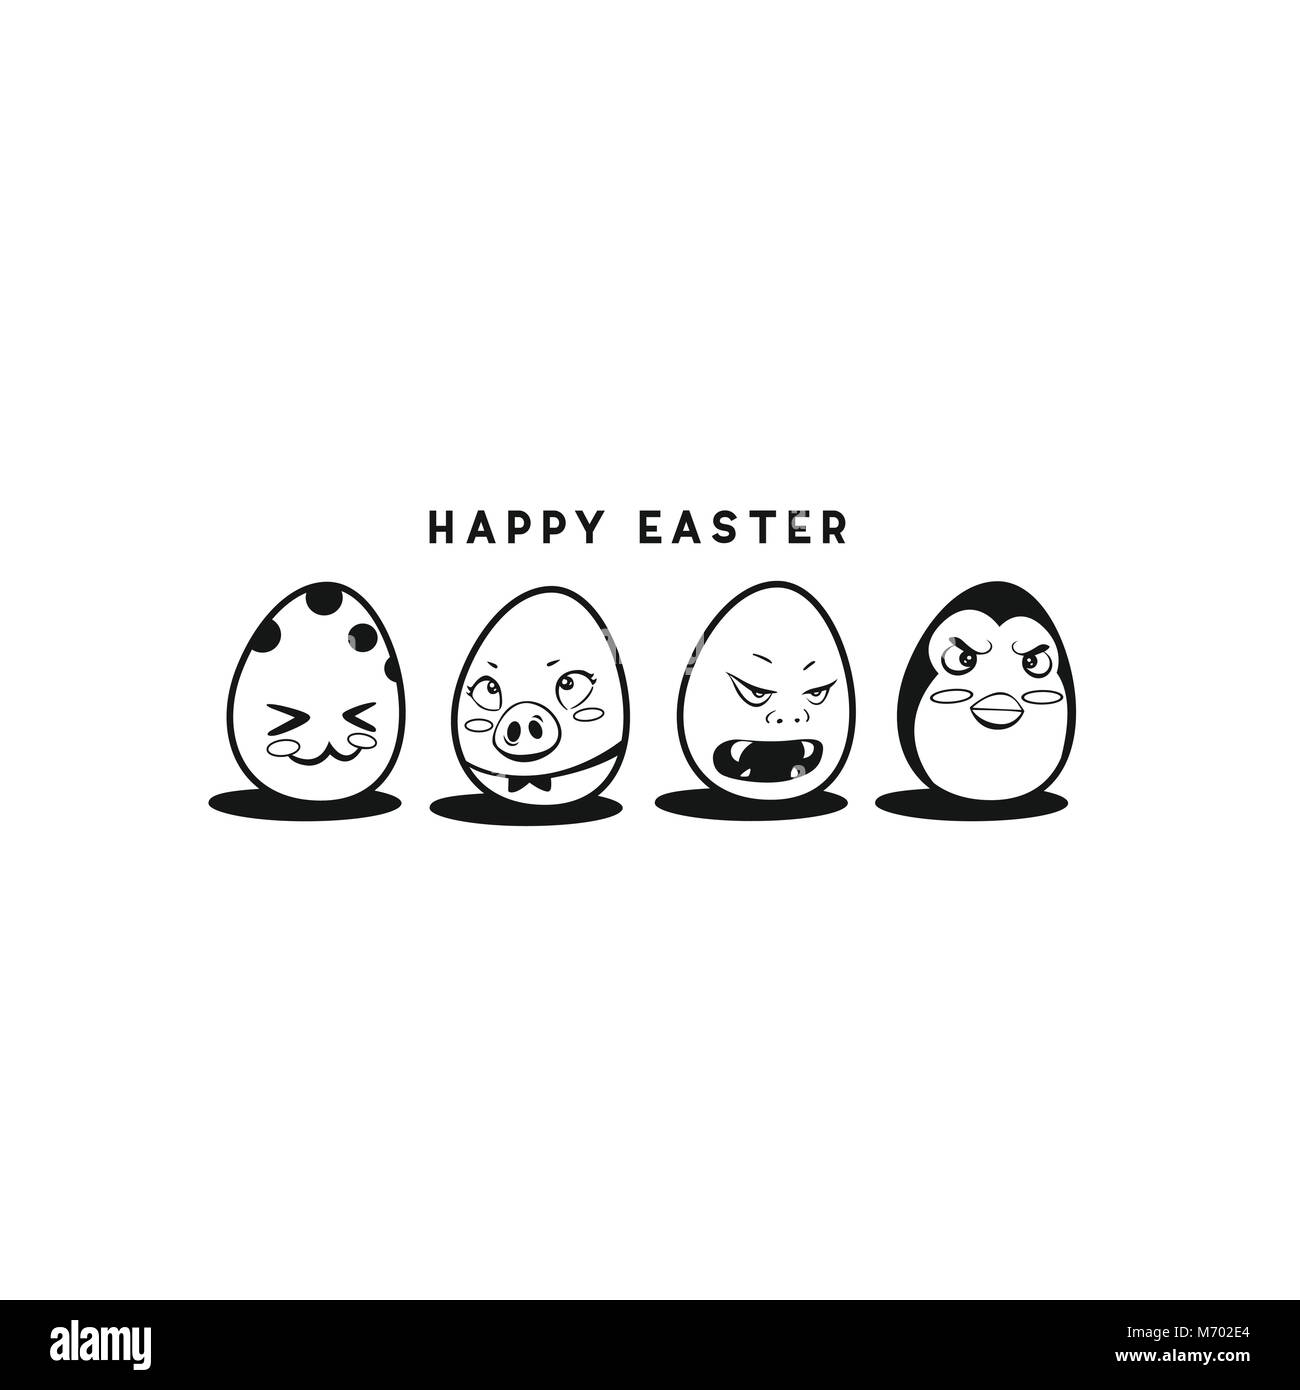 Happy easter egg vector illustration Stock Vector